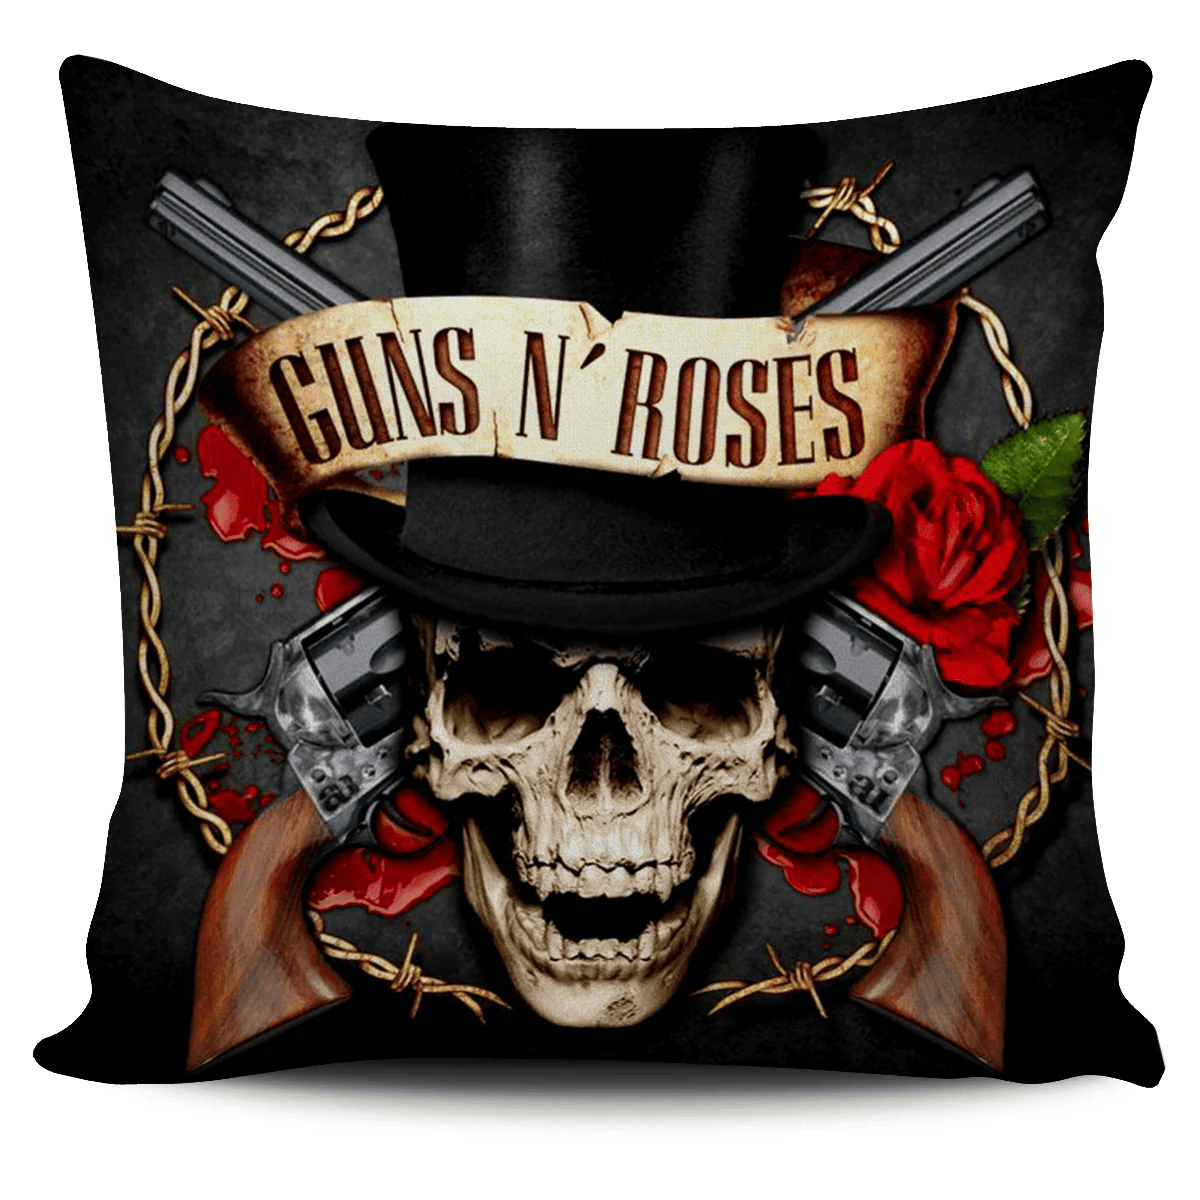 Guns N' Roses Pillow cover 02 H